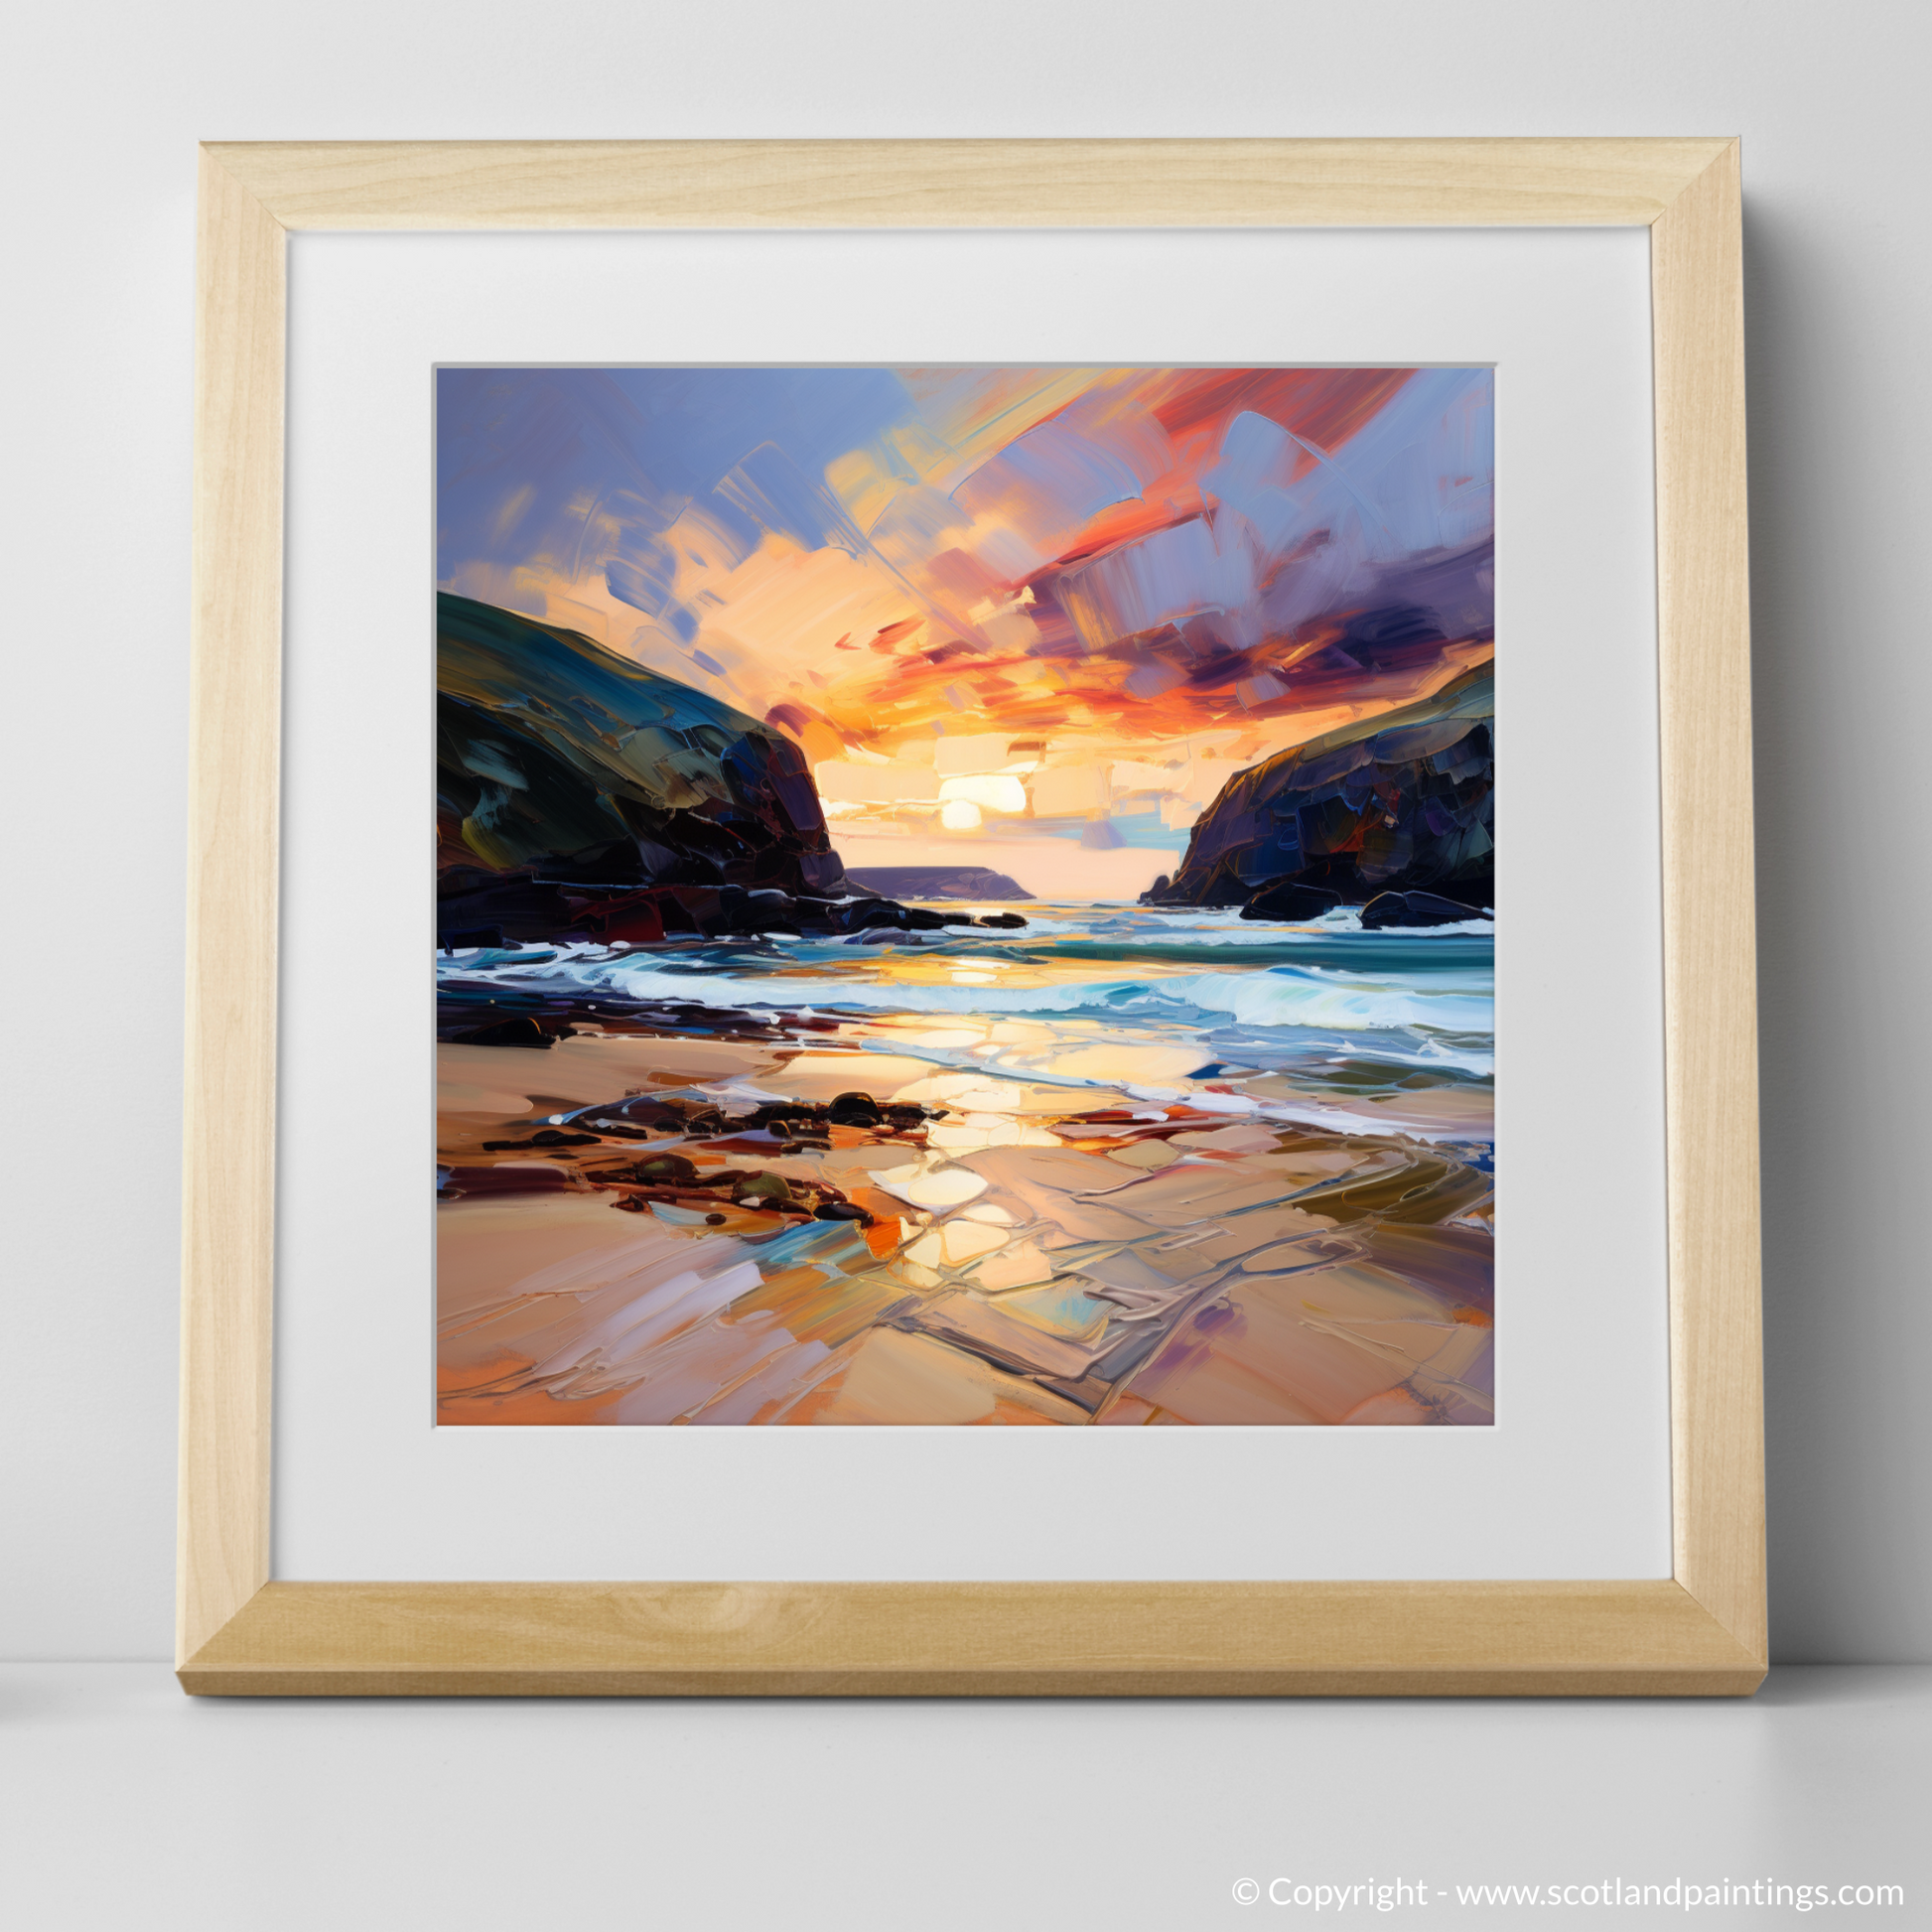 Art Print of Sandwood Bay at dusk with a natural frame